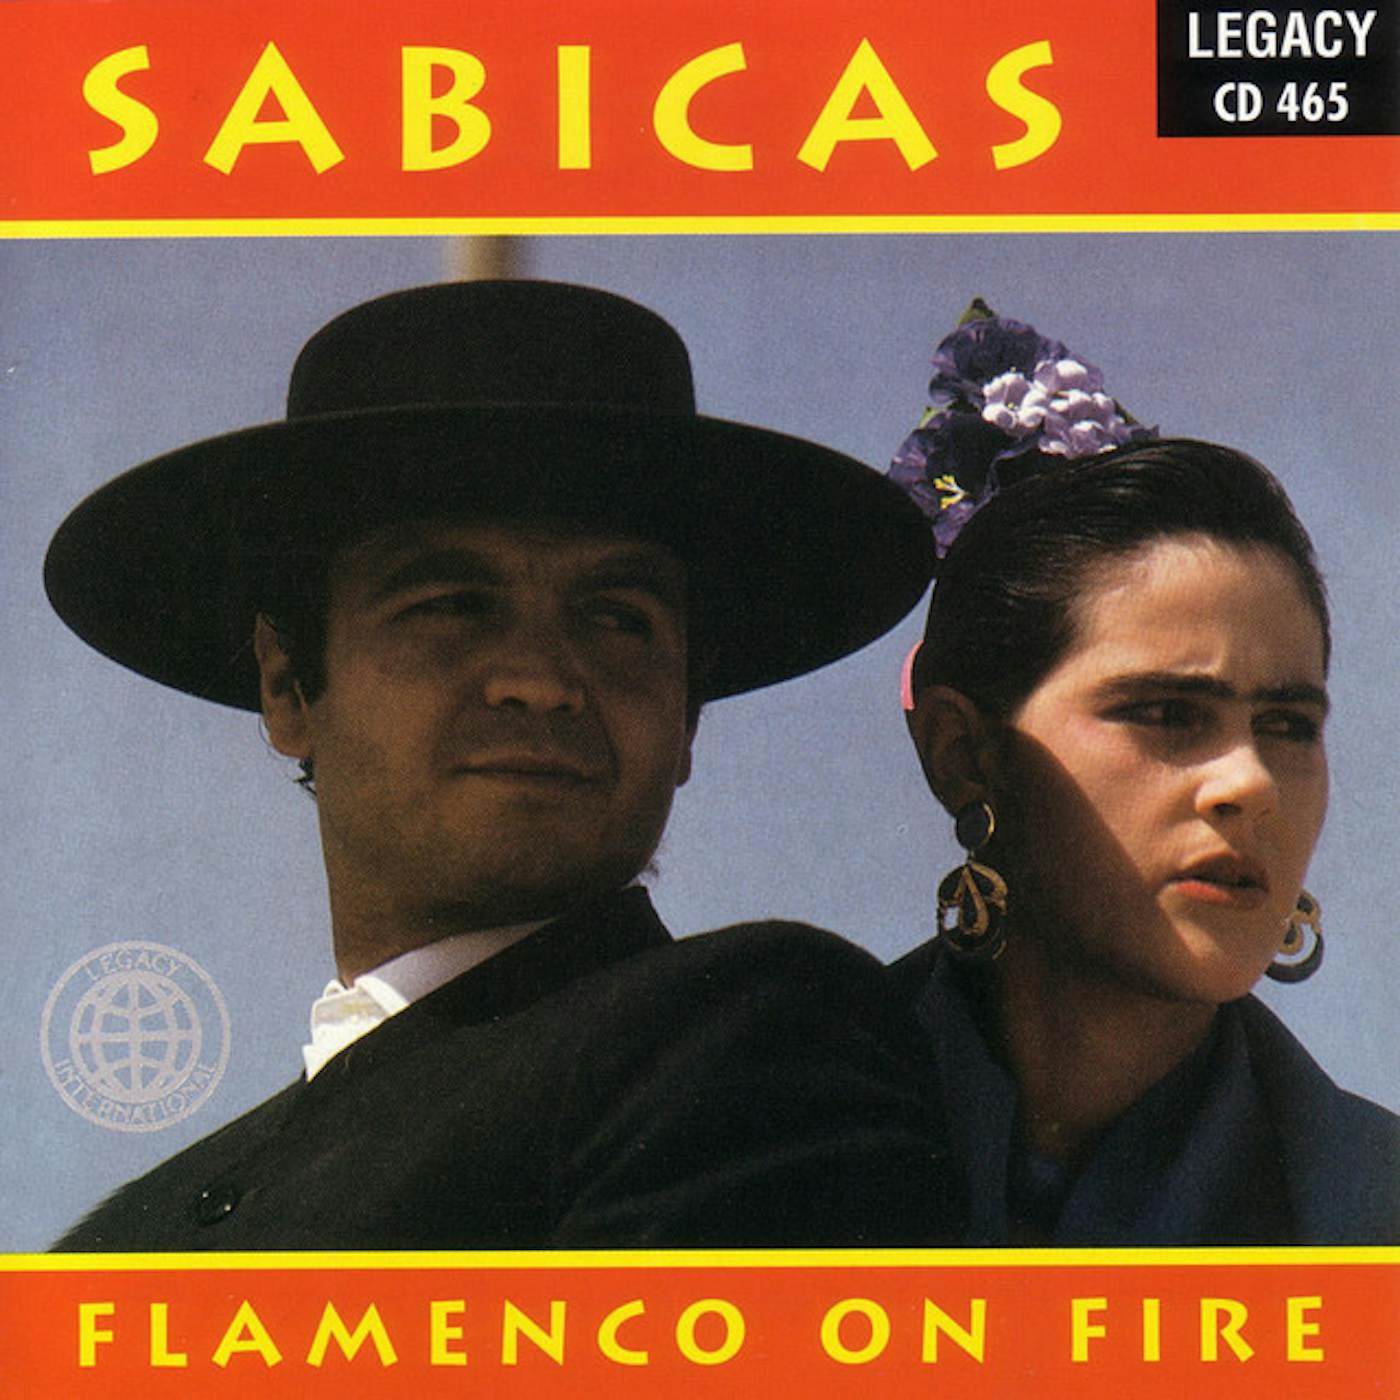 Sabicas FLAMENCO ON FIRE CD